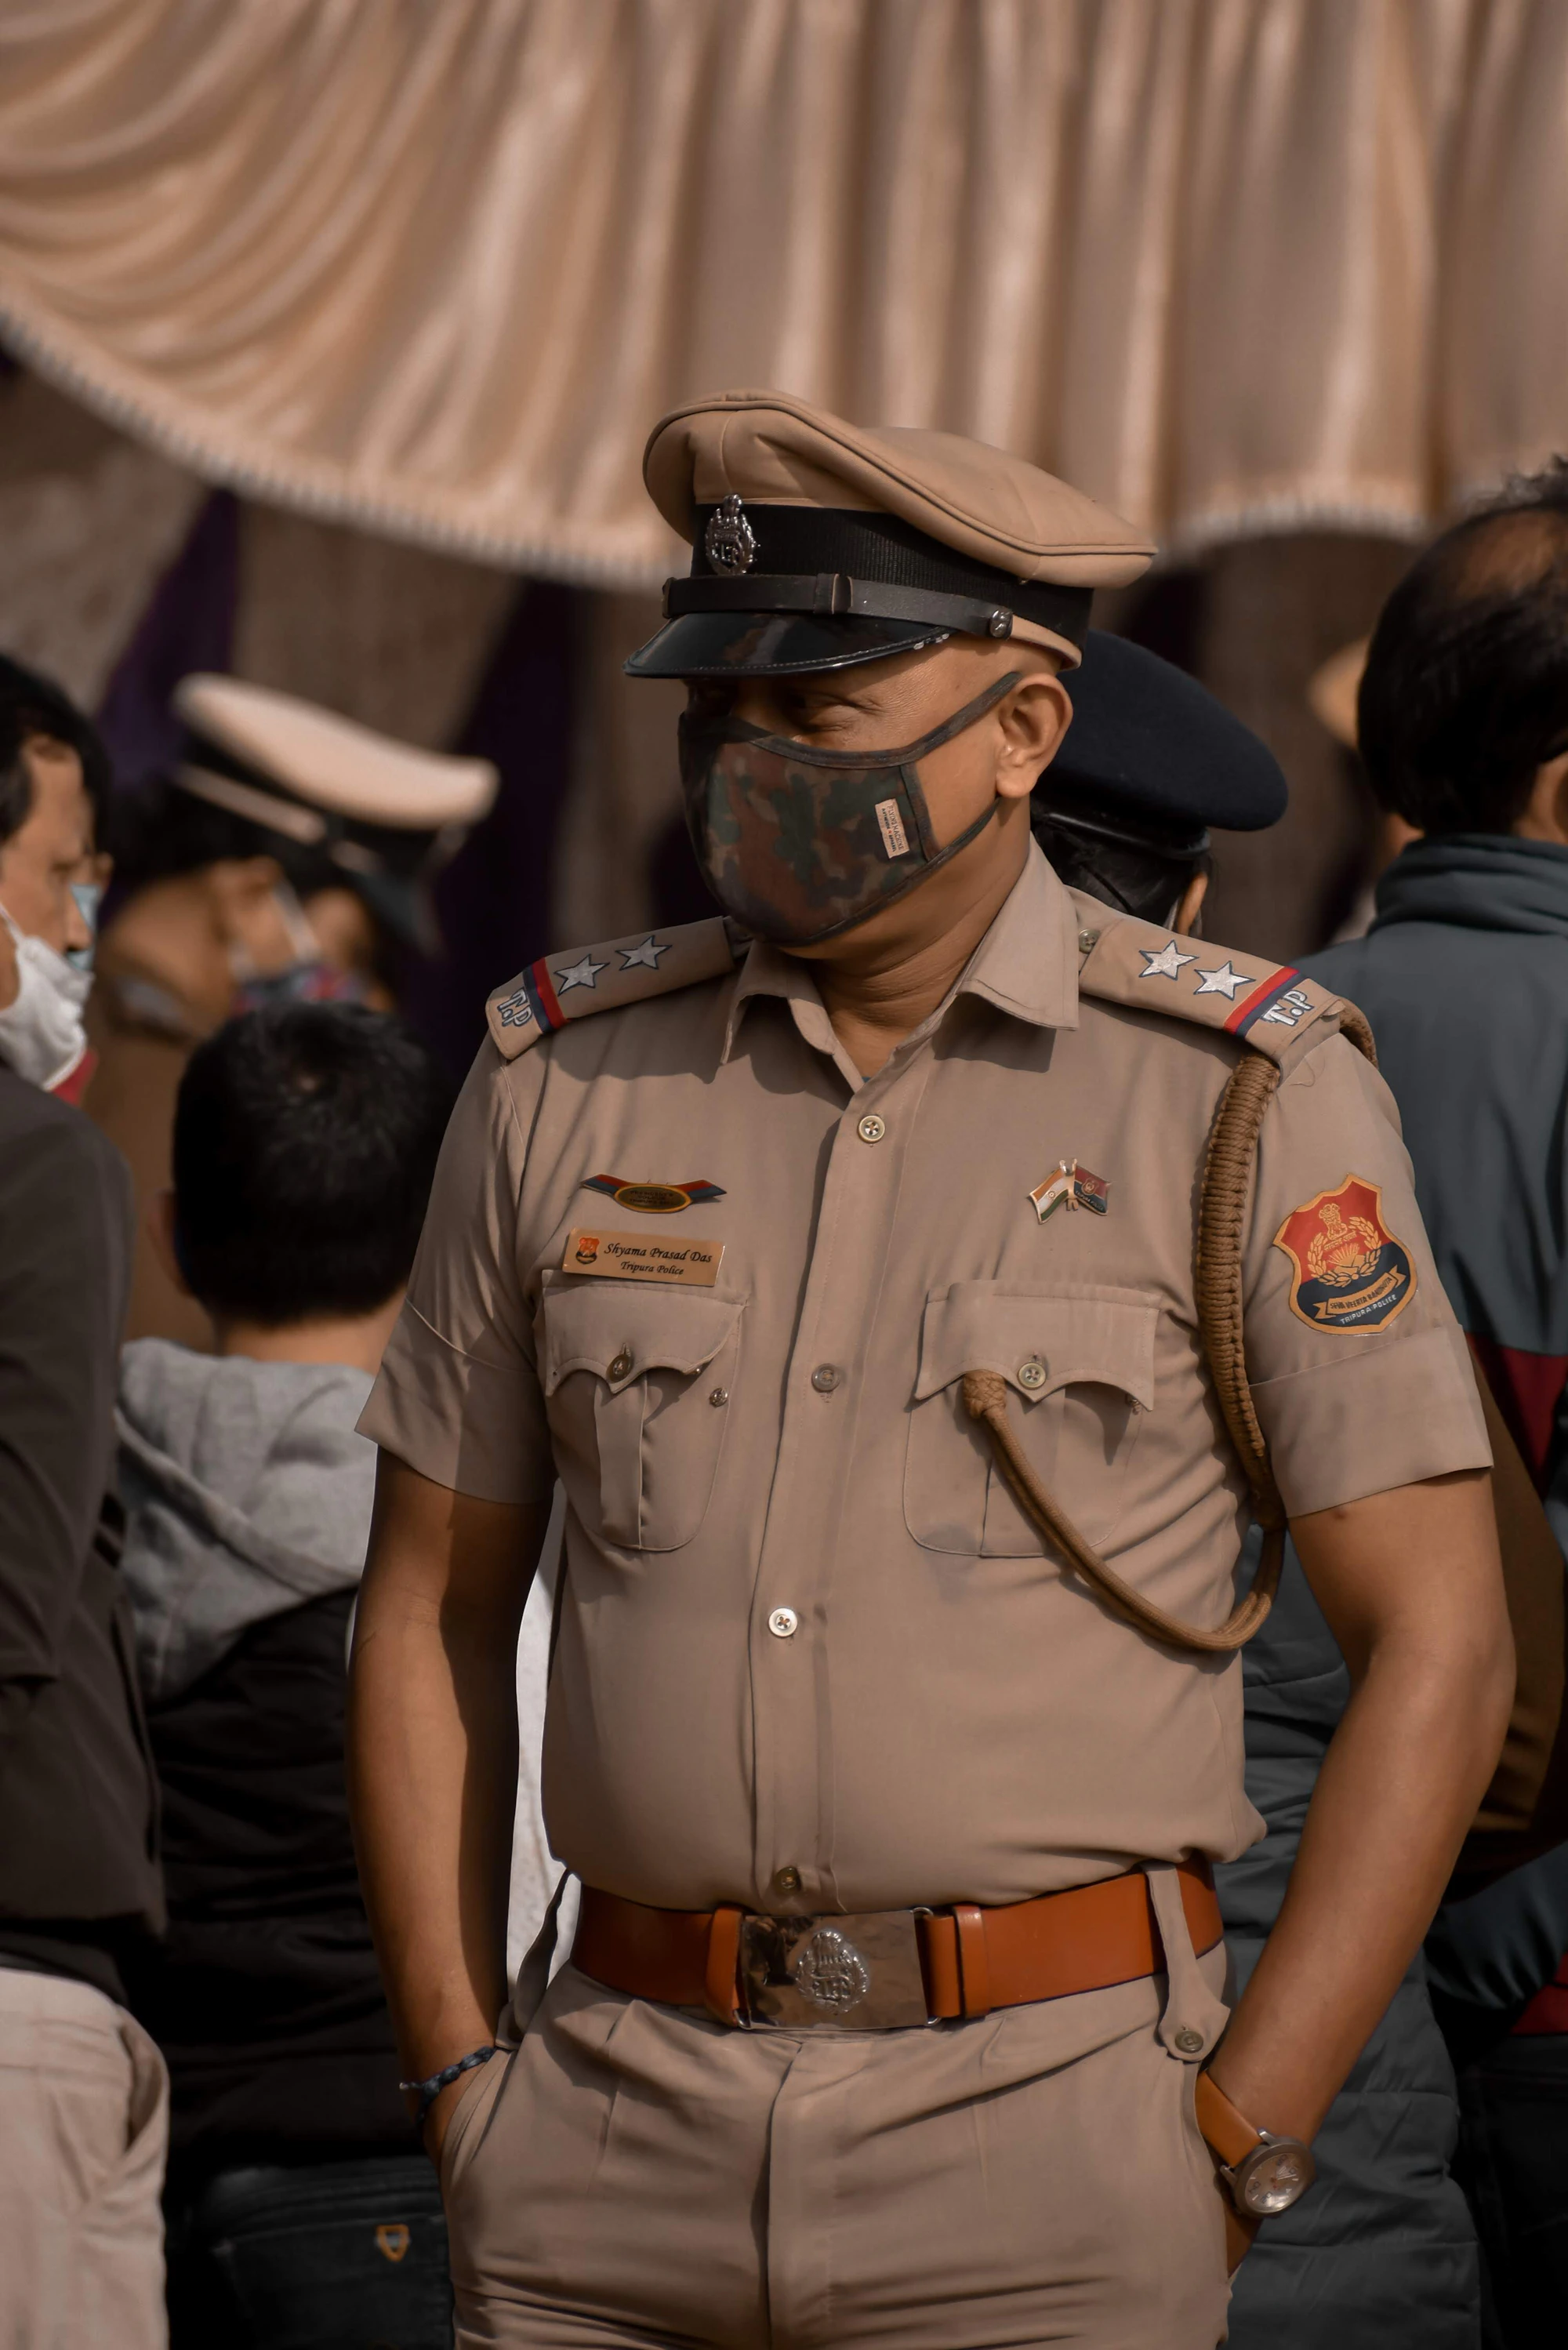 Polygon powers India's police complaint platform to combat corruption